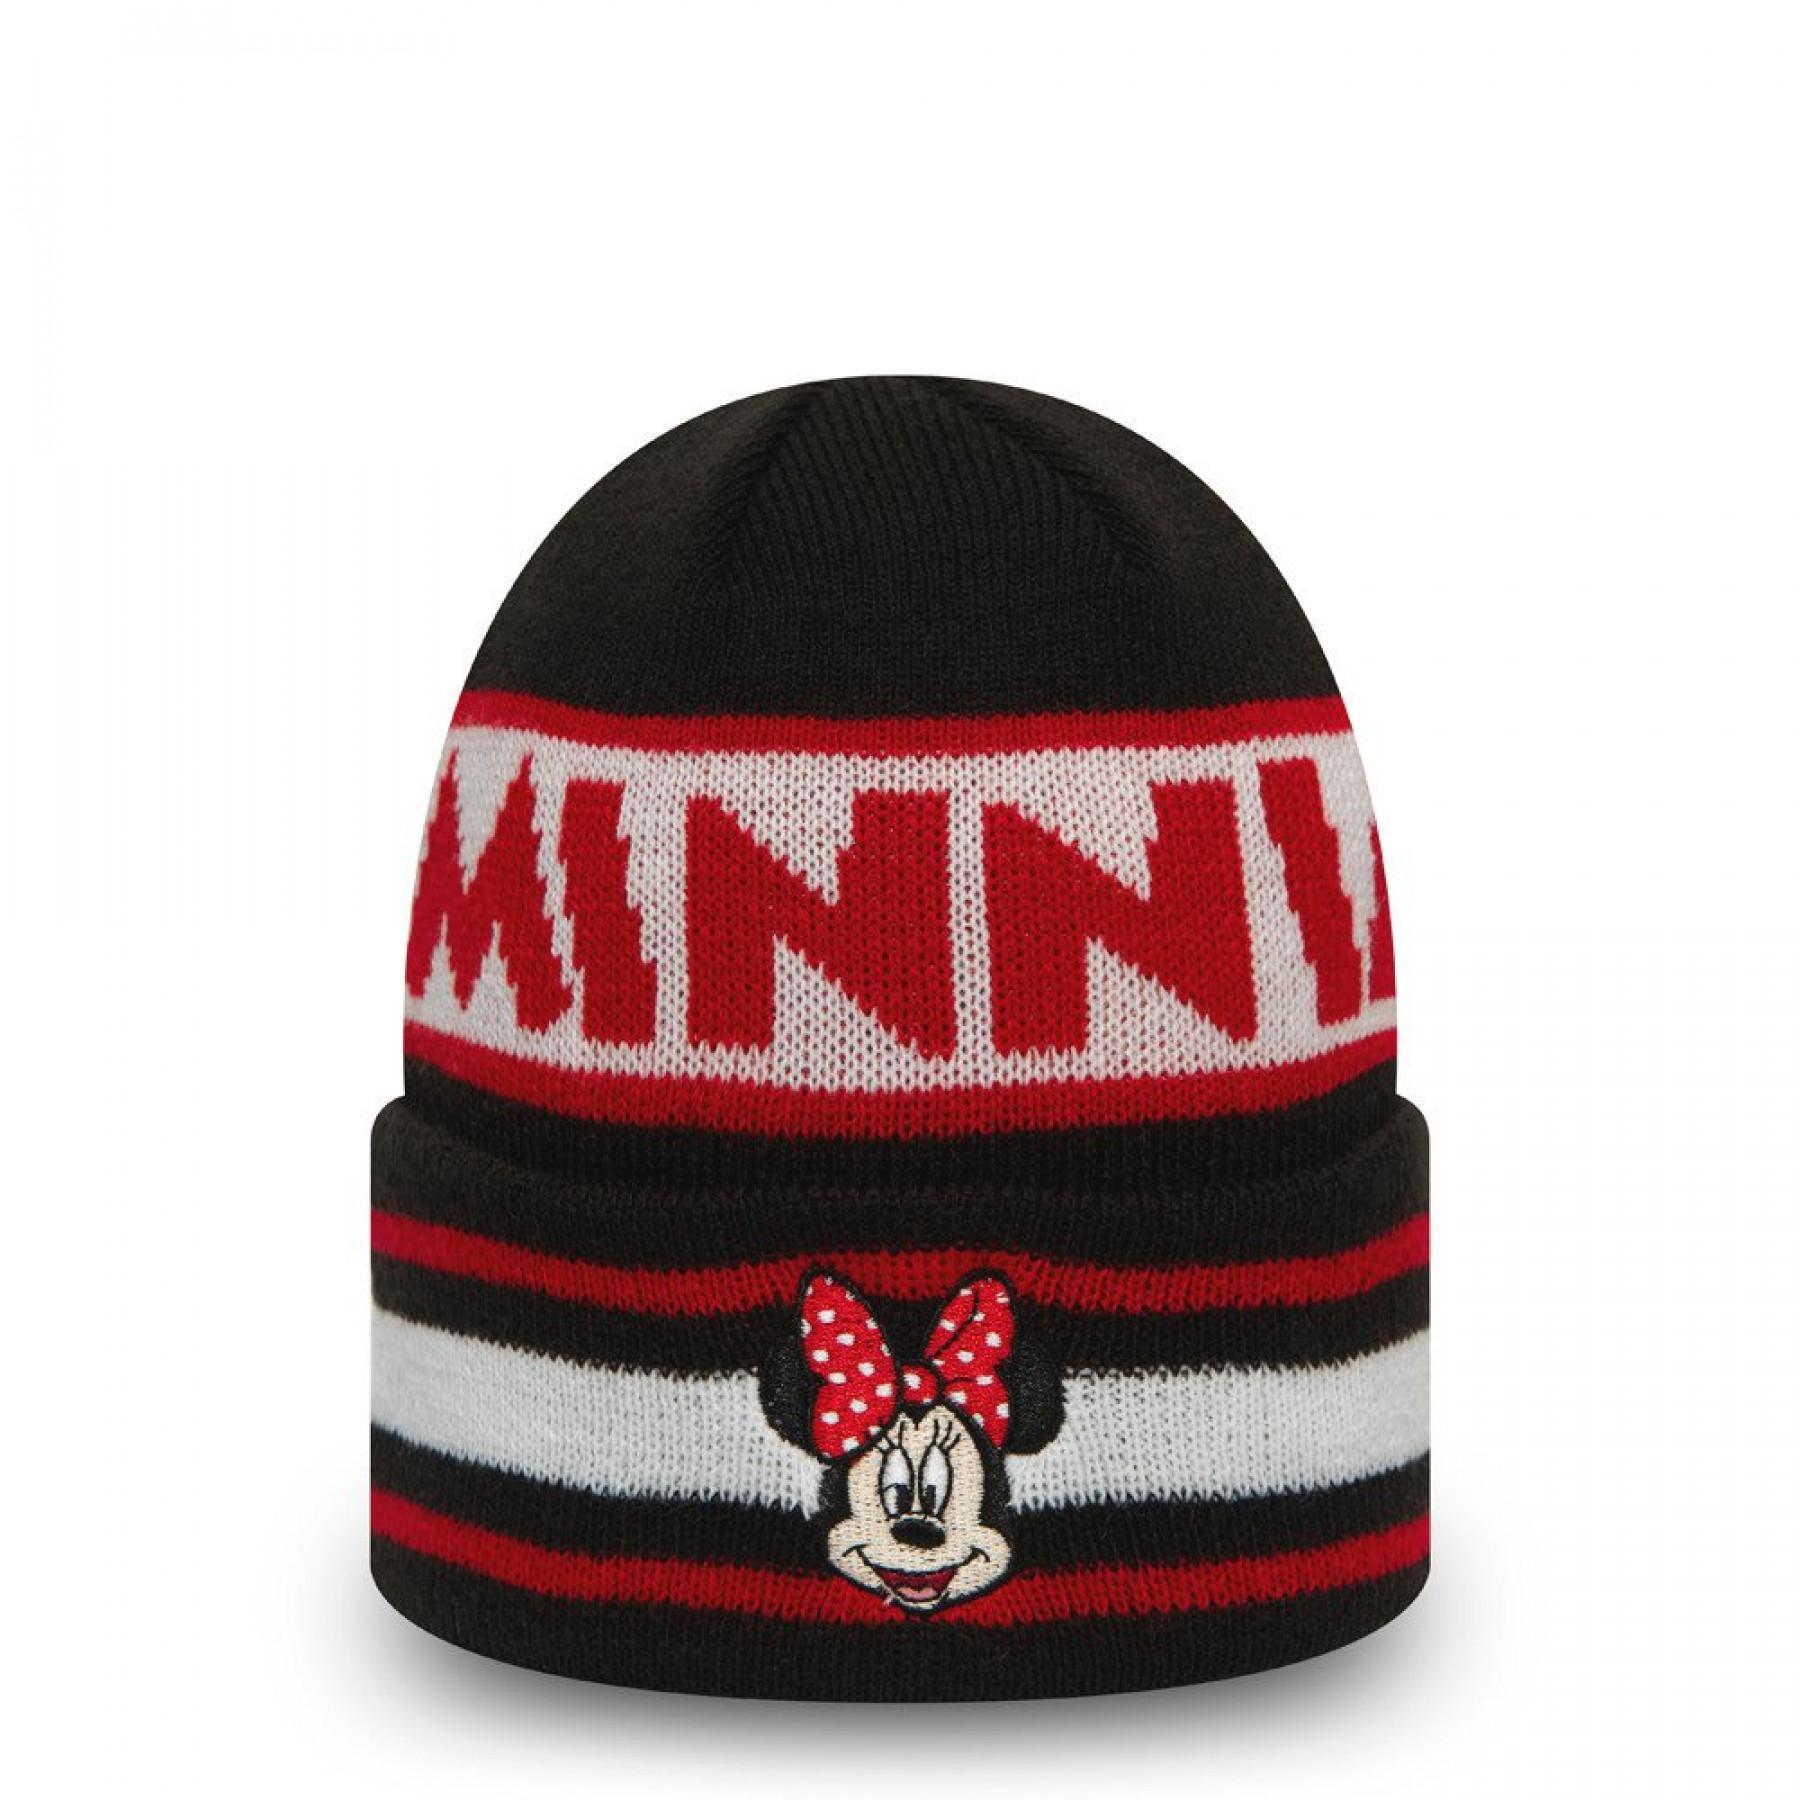 Sombrero para niños New Era Minnie Mouse Disney Character Knit